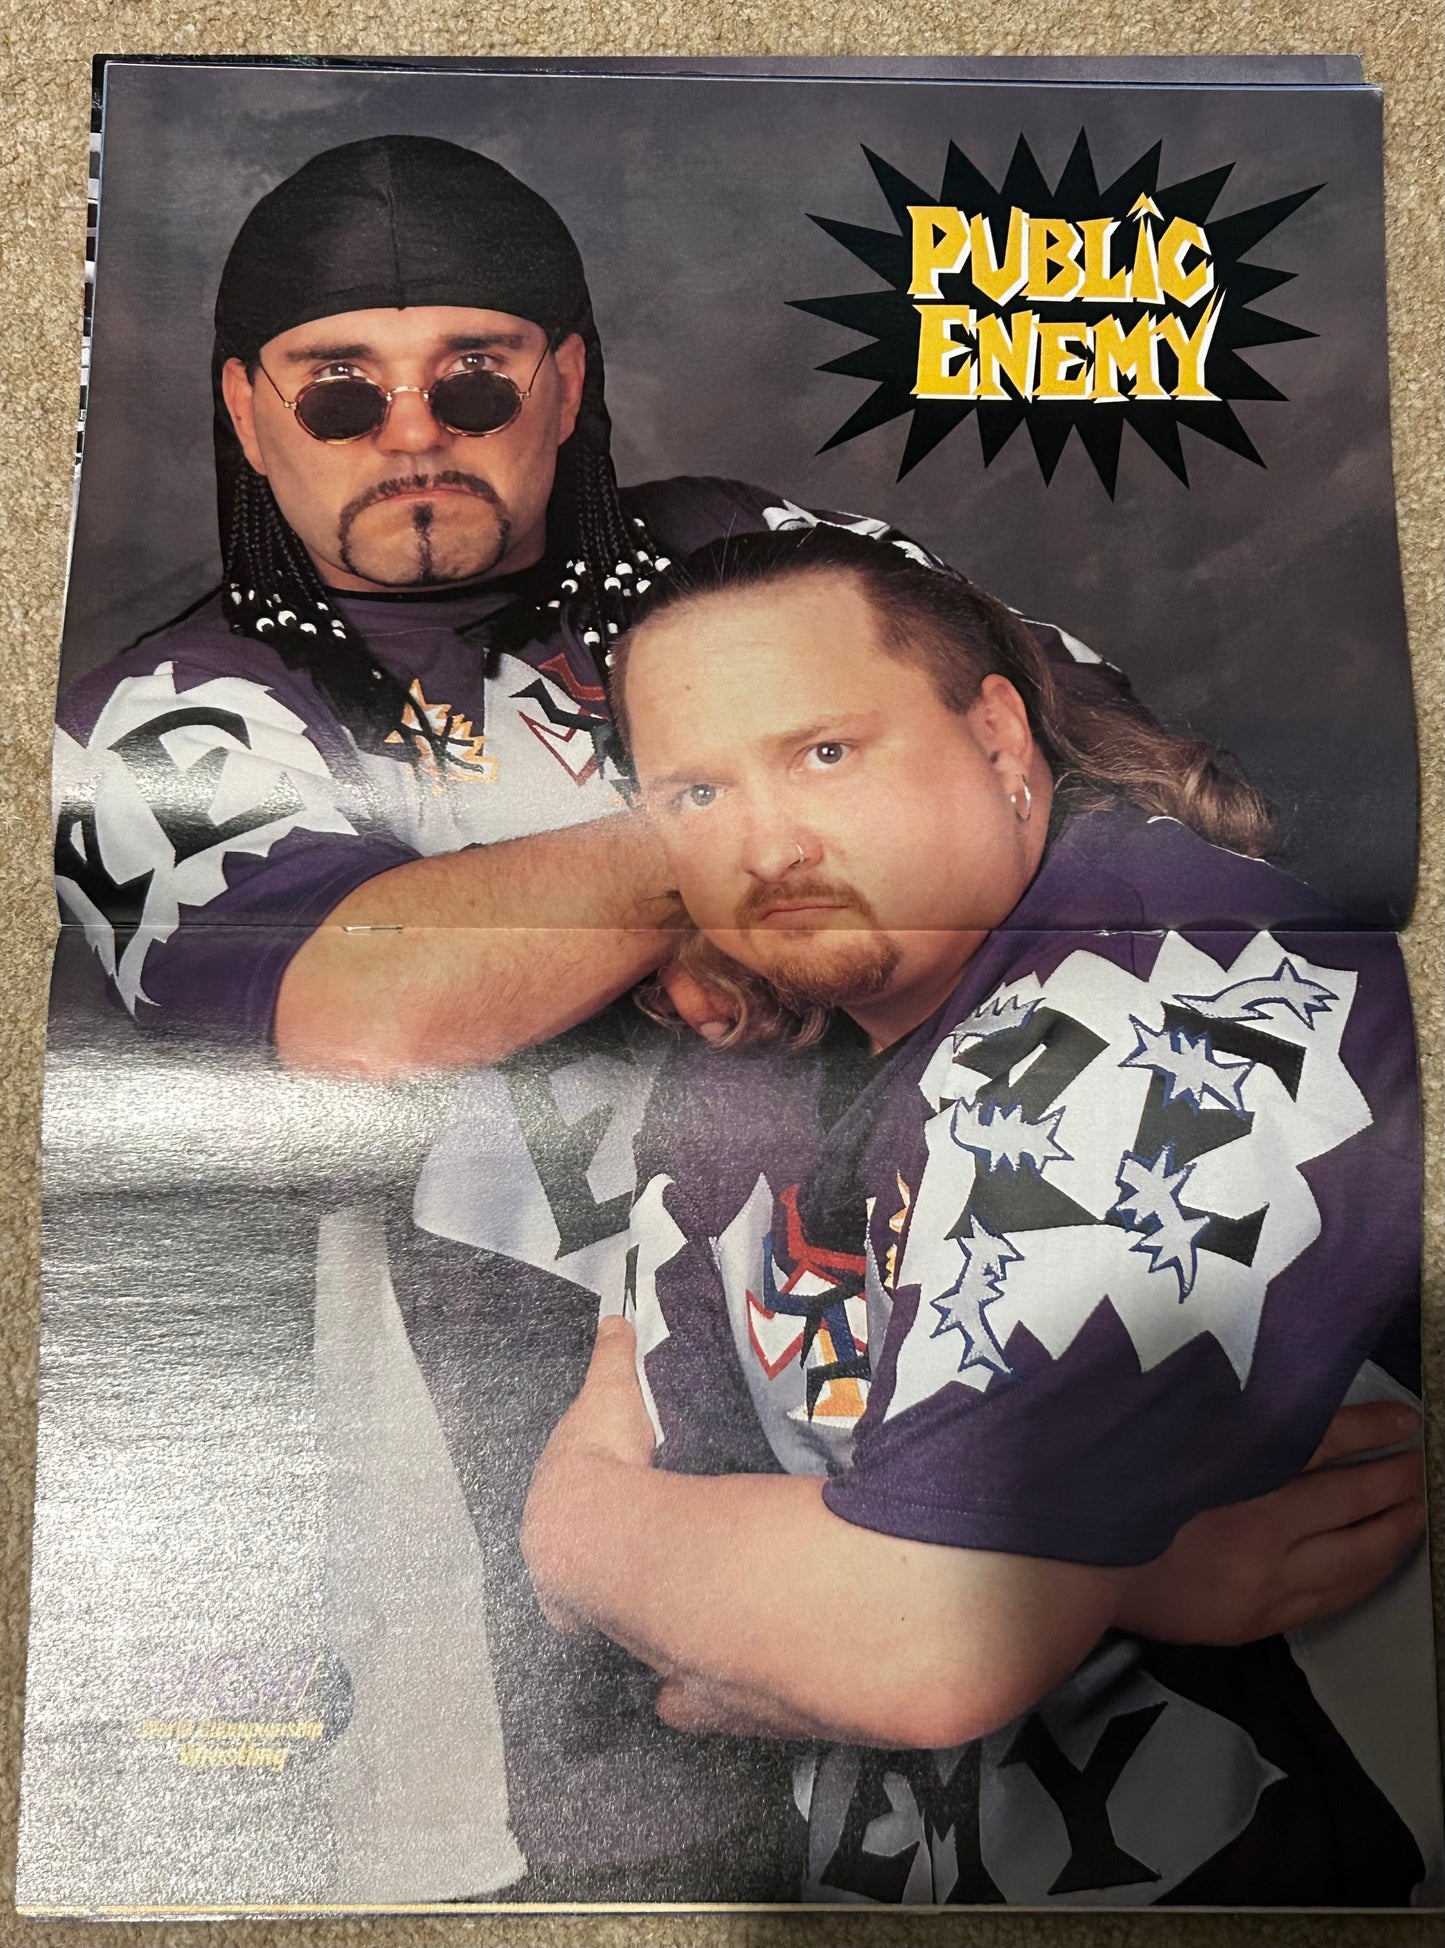 WCW Magazine June 1996 Issue 16